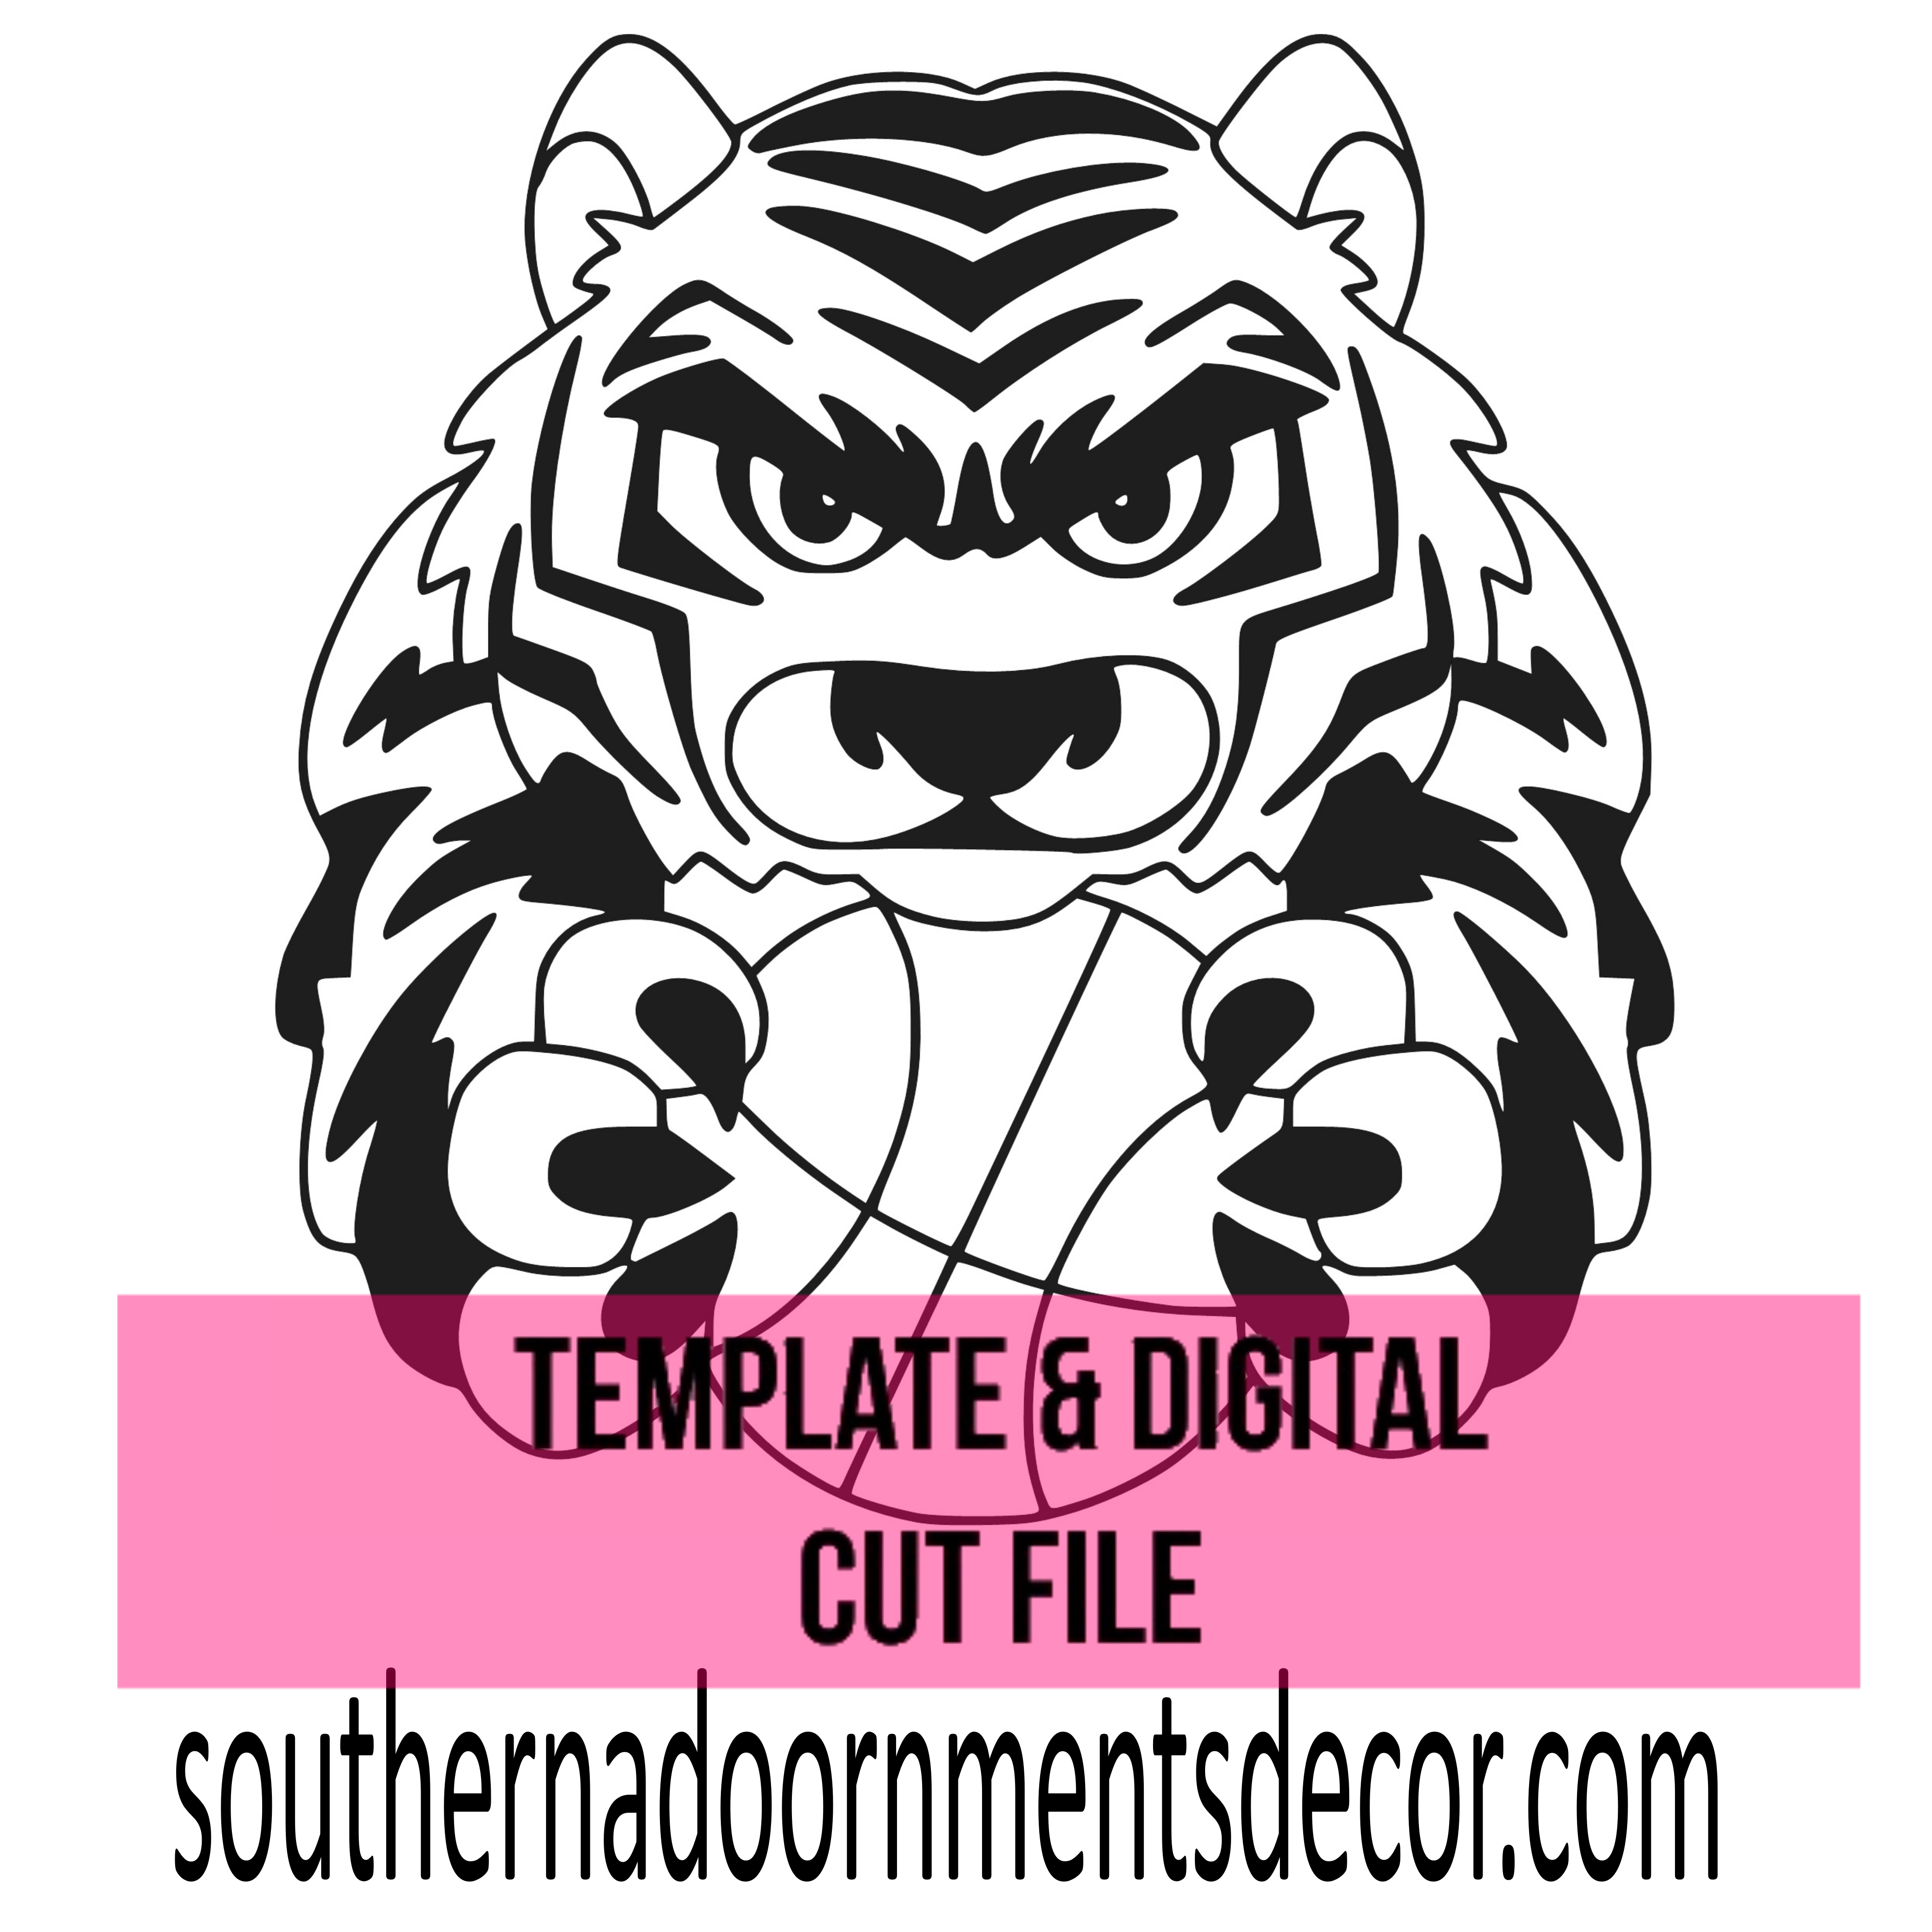 Tigers Basketball Template & Digital Cut File